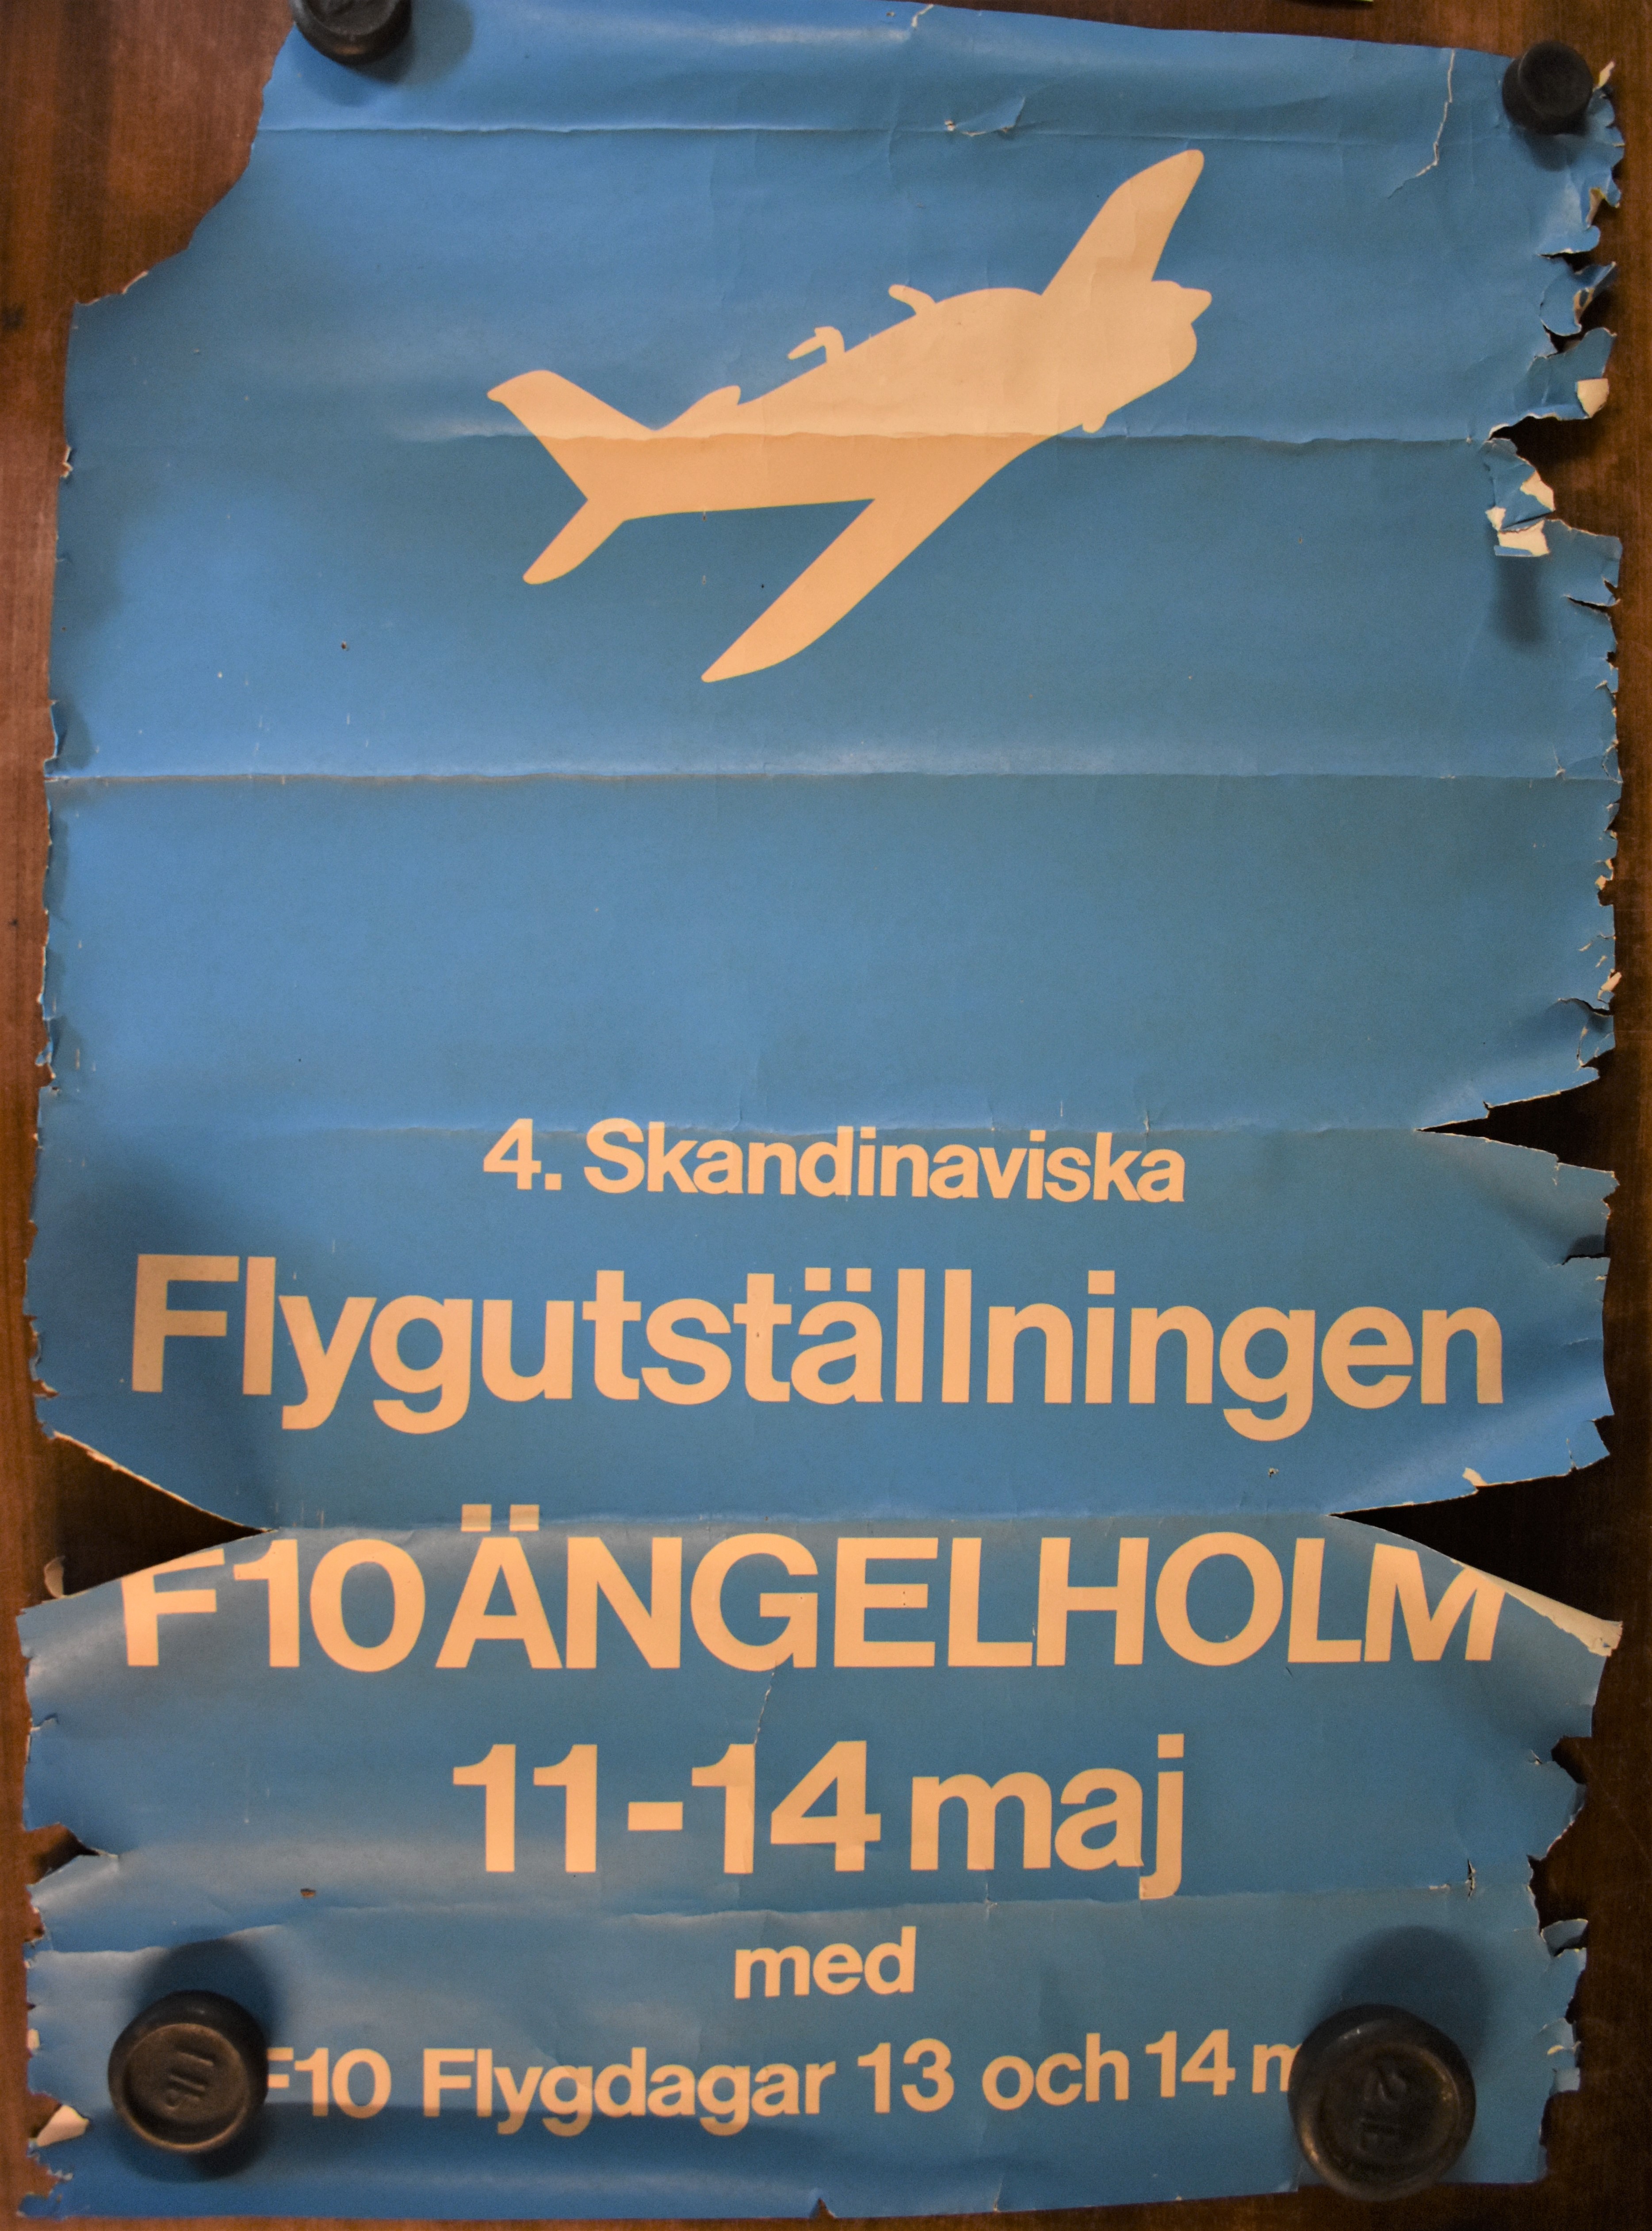 Poster '4' Skandinaviska' F20 Angelholm. Measurements 100cm x 69cm. In poor condition